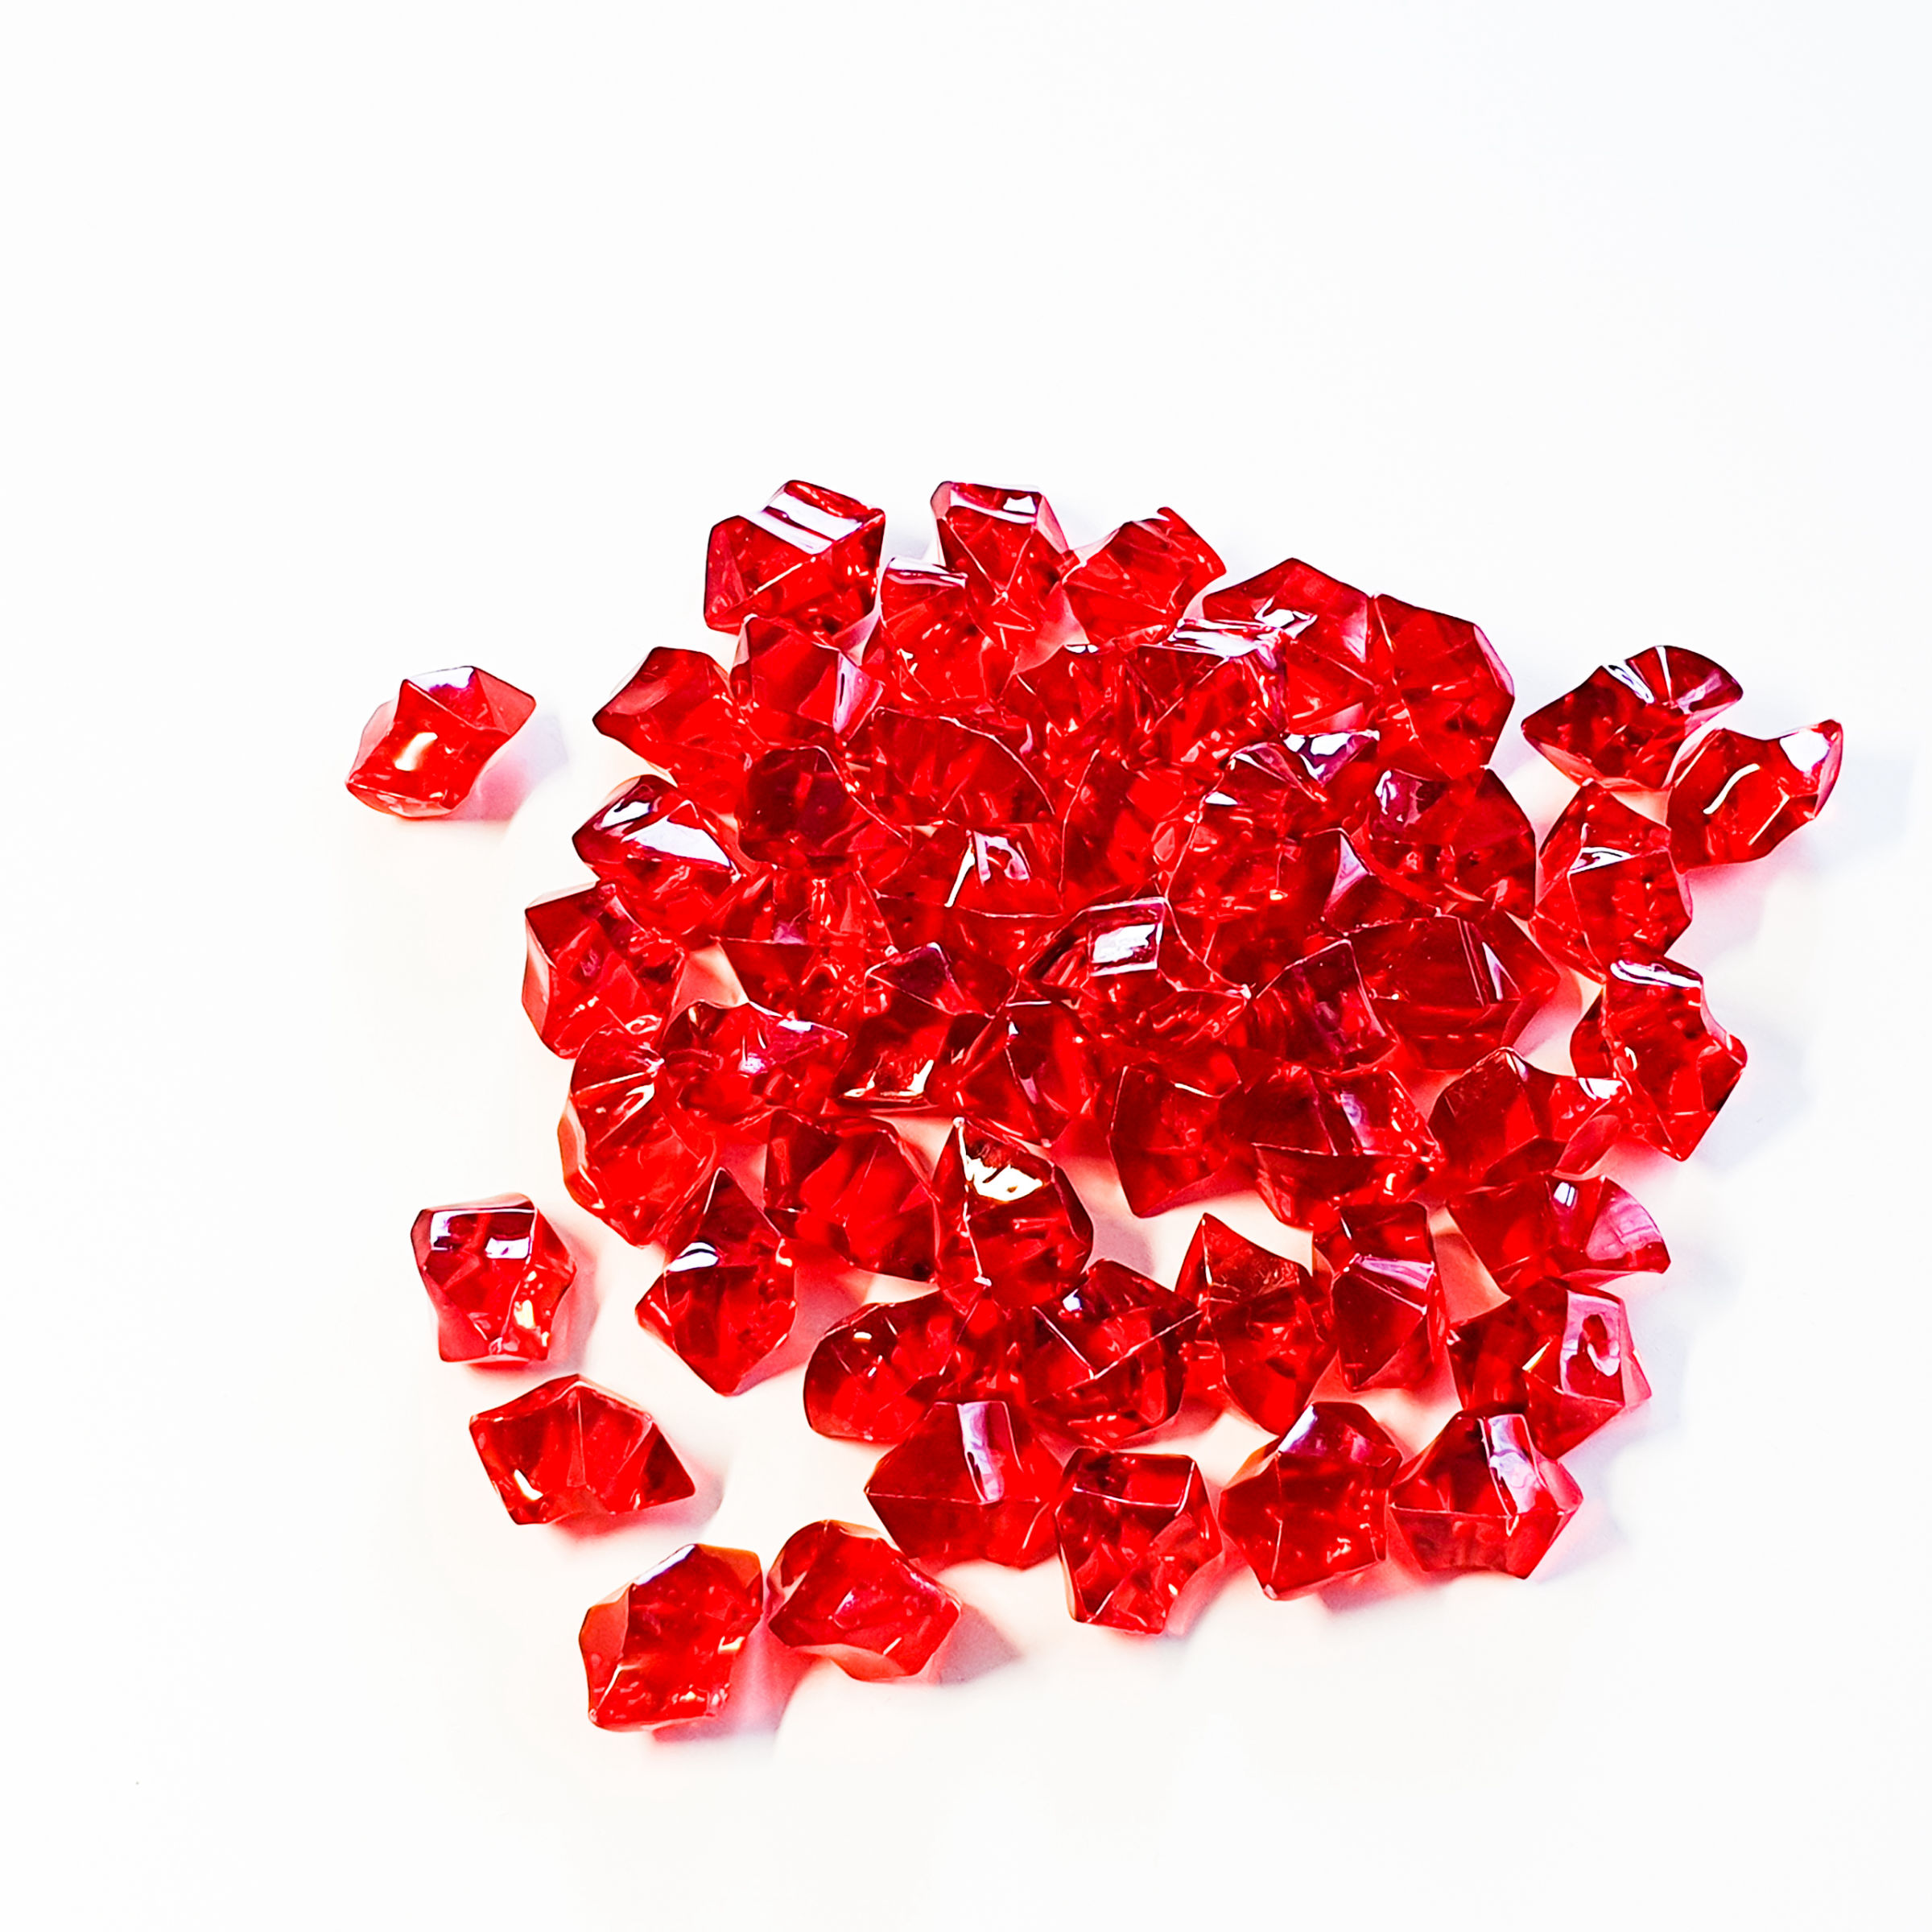 Handful of bright red Spyrium crystals